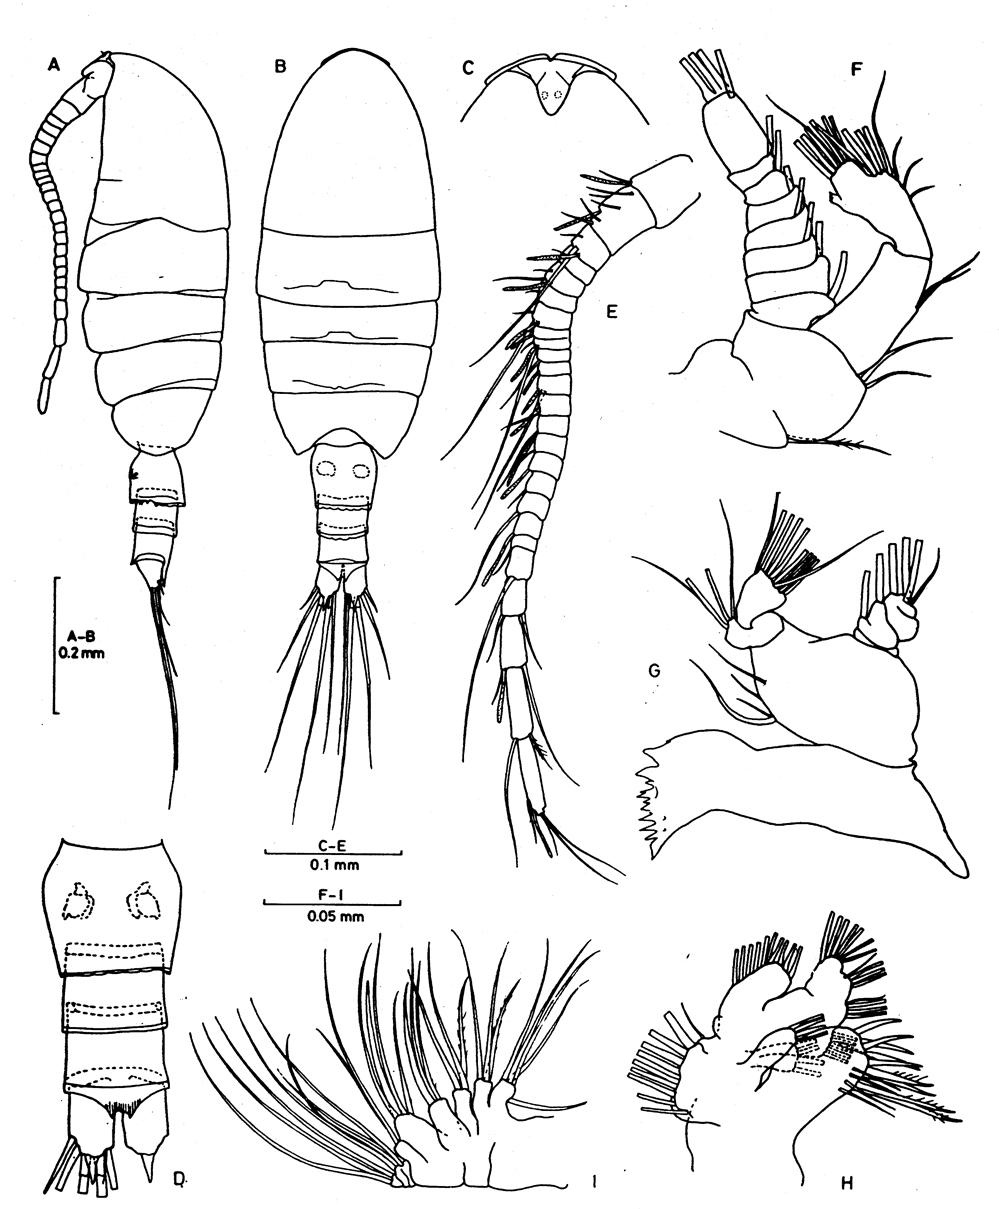 Species Boholina crassicephala - Plate 1 of morphological figures